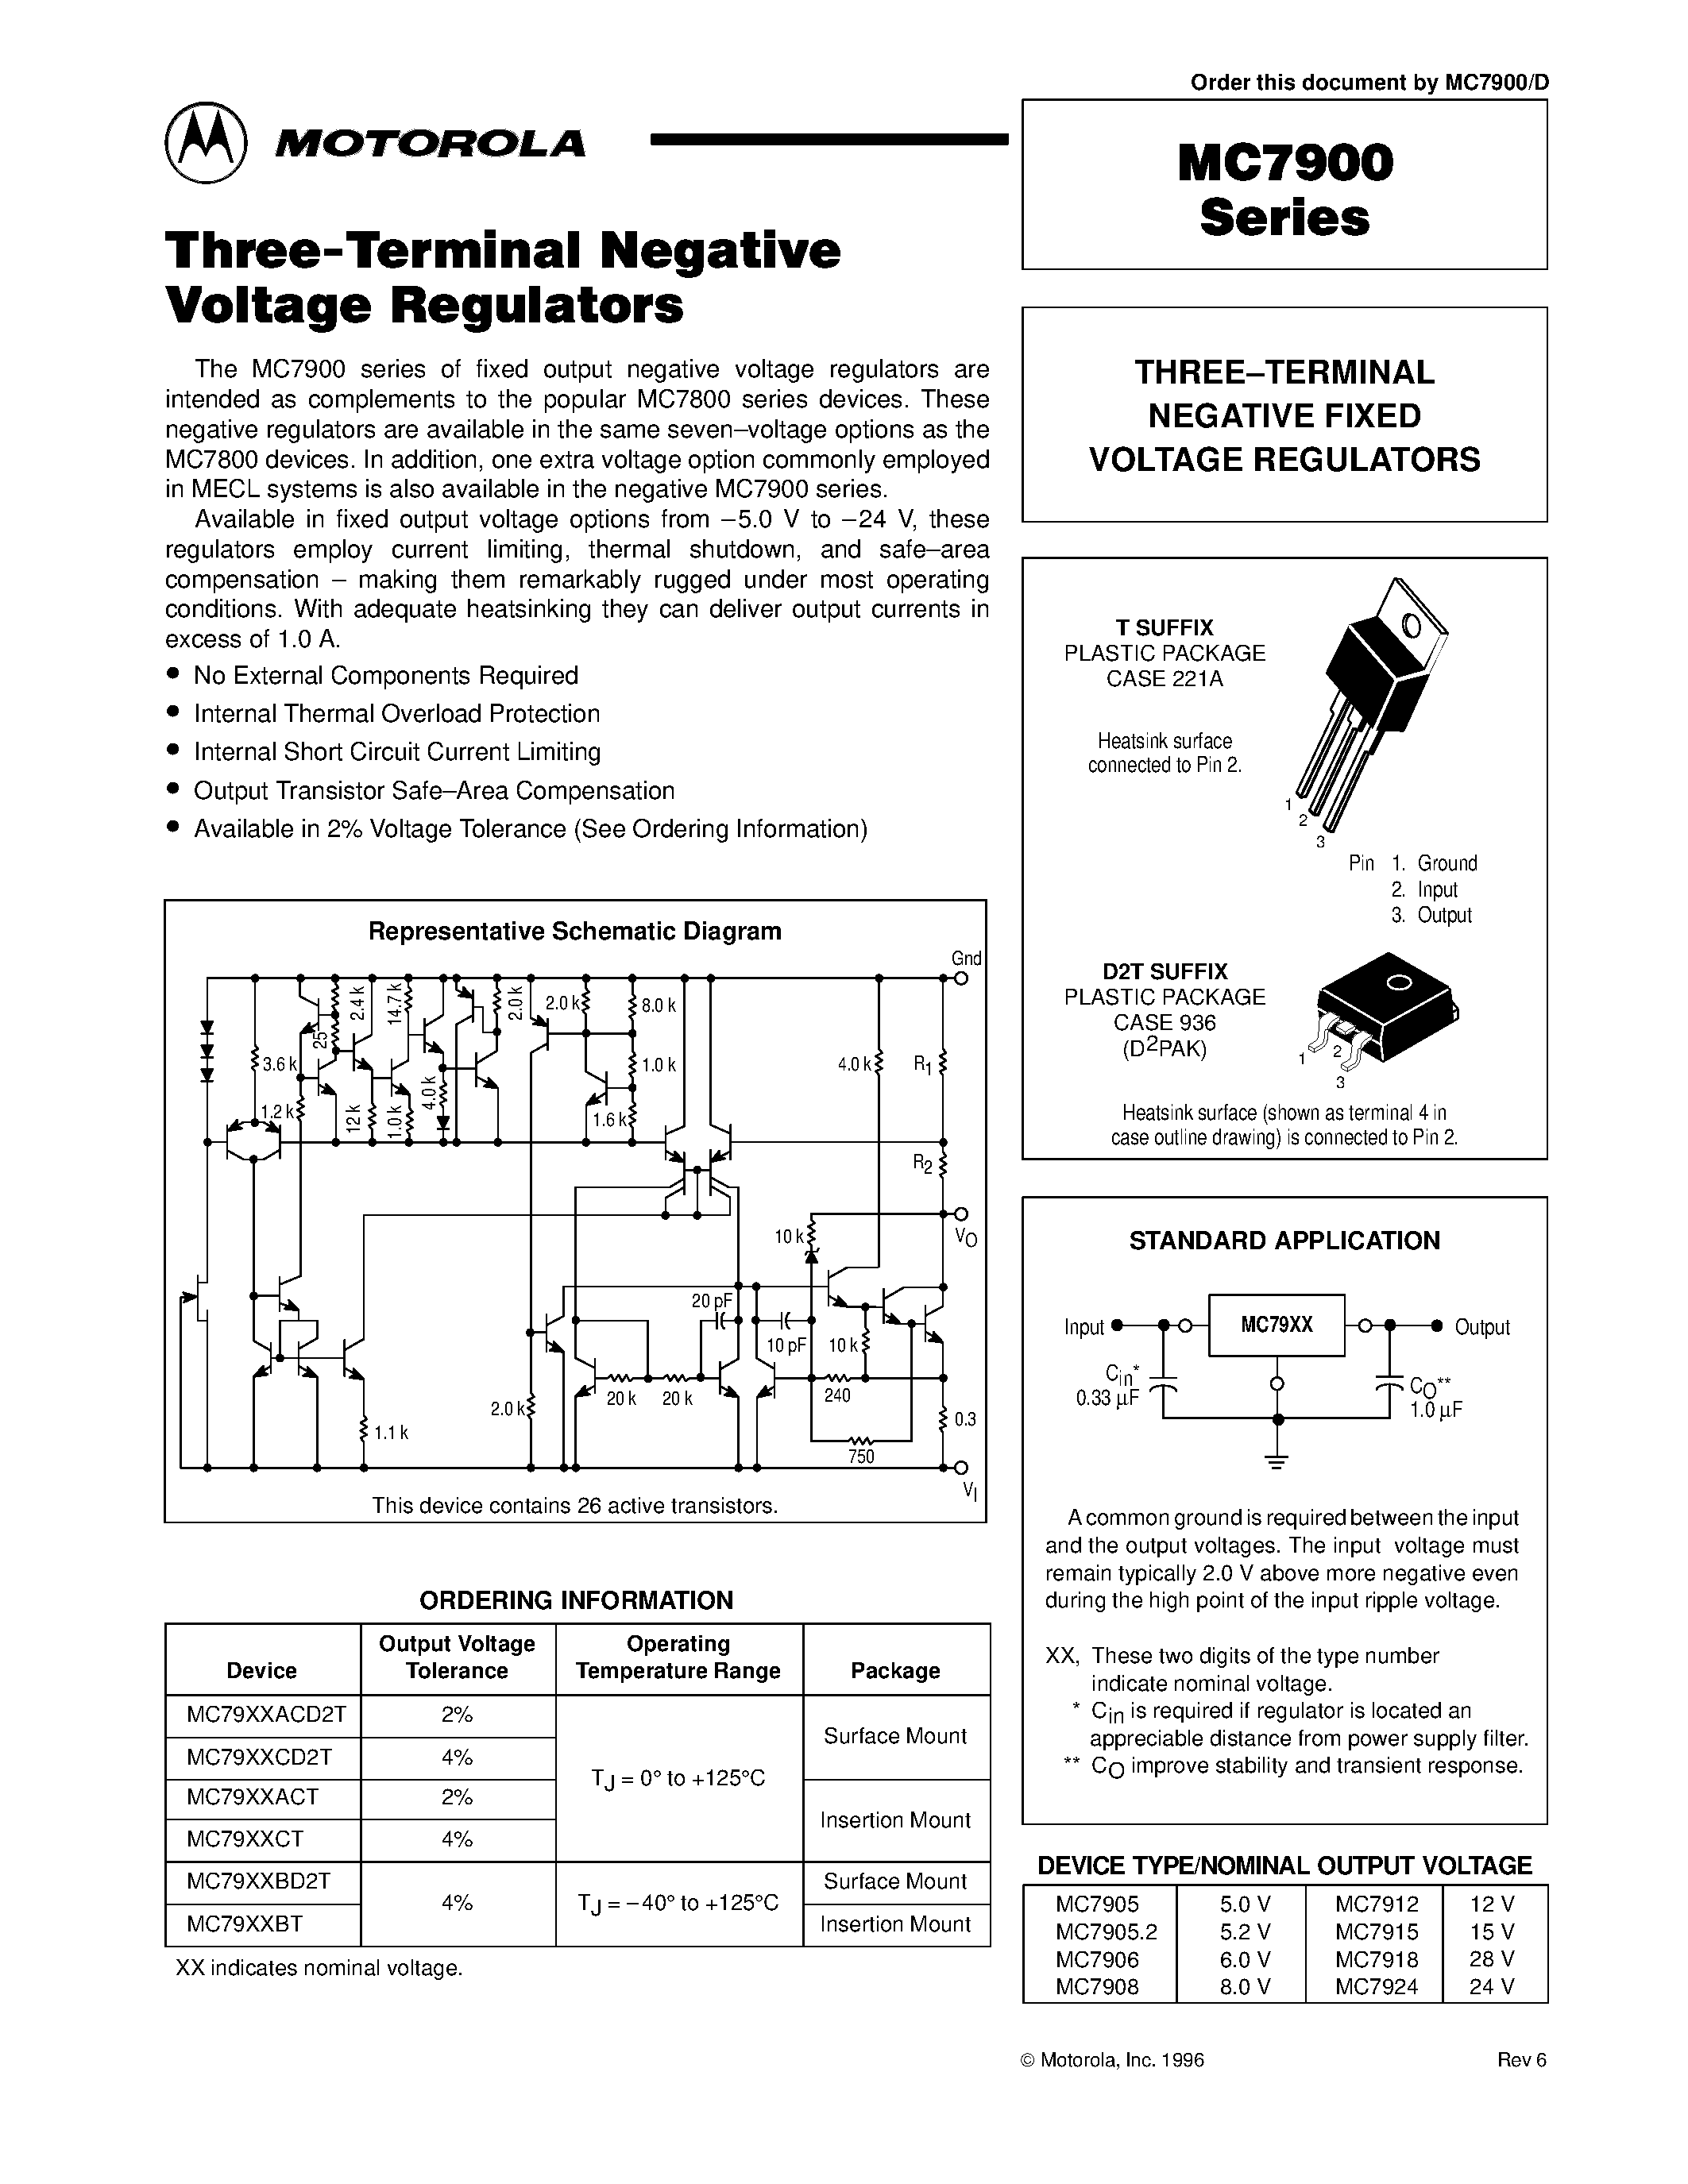 Datasheet MC7906BD2T - THREE-TERMINAL NEGATIVE FIXED VOLTAGE REGULATORS page 1